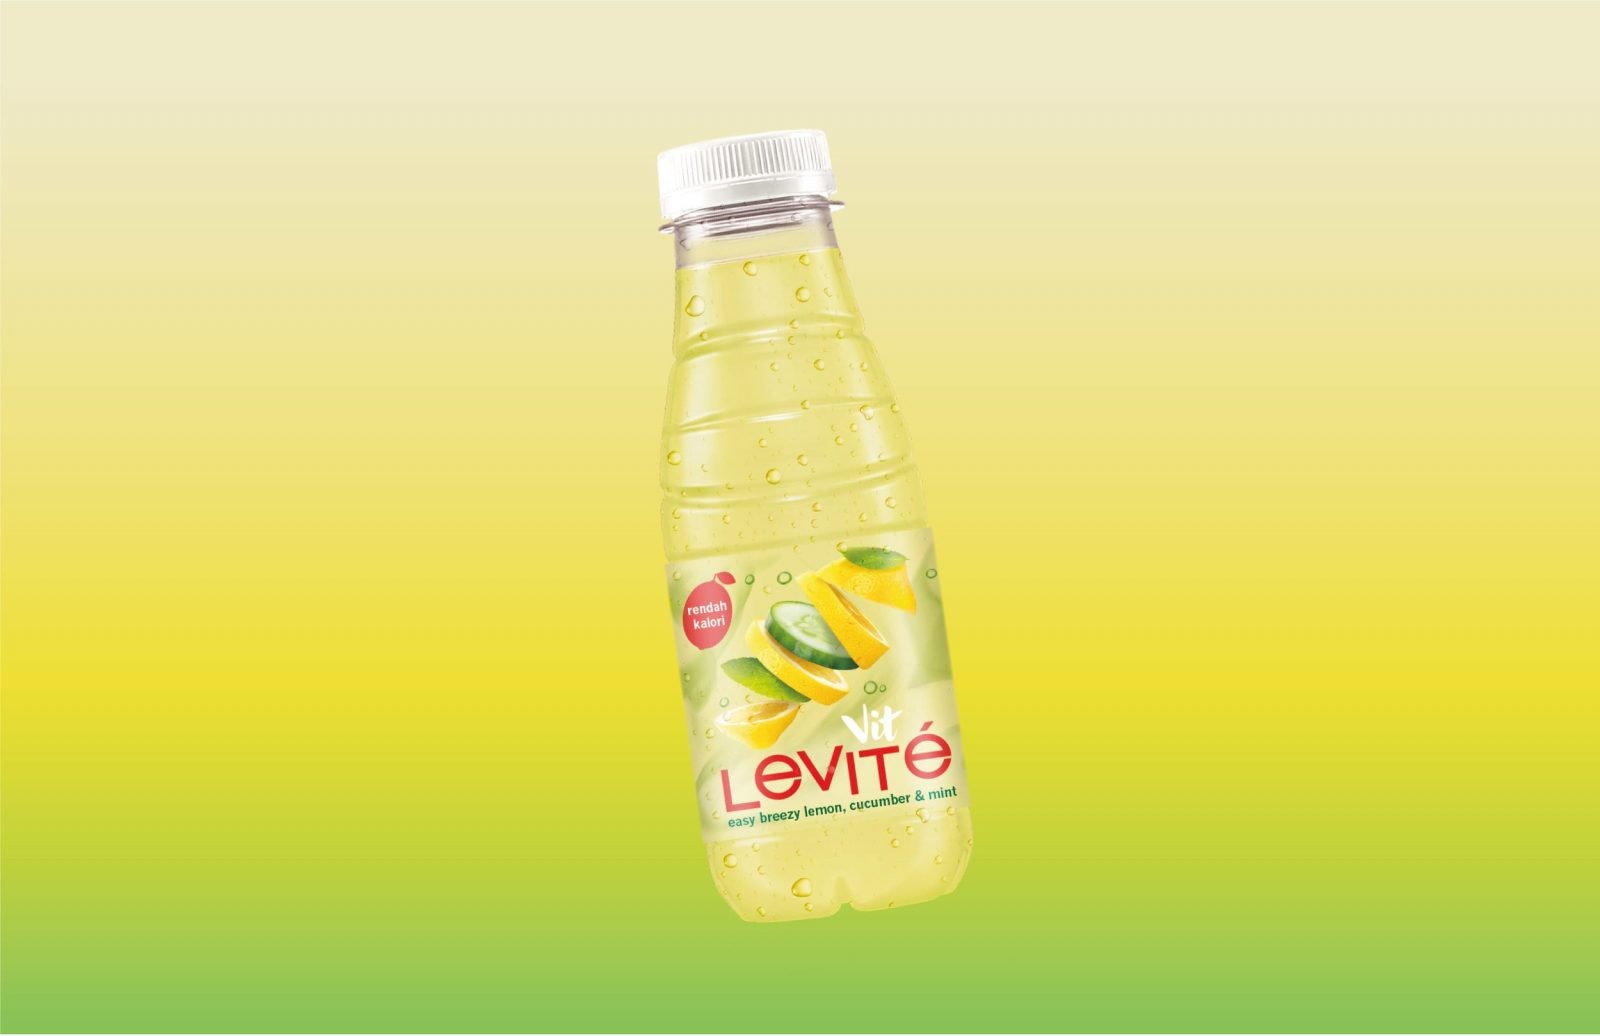 Packaging Rebrand for Vit Levite fruit Waters